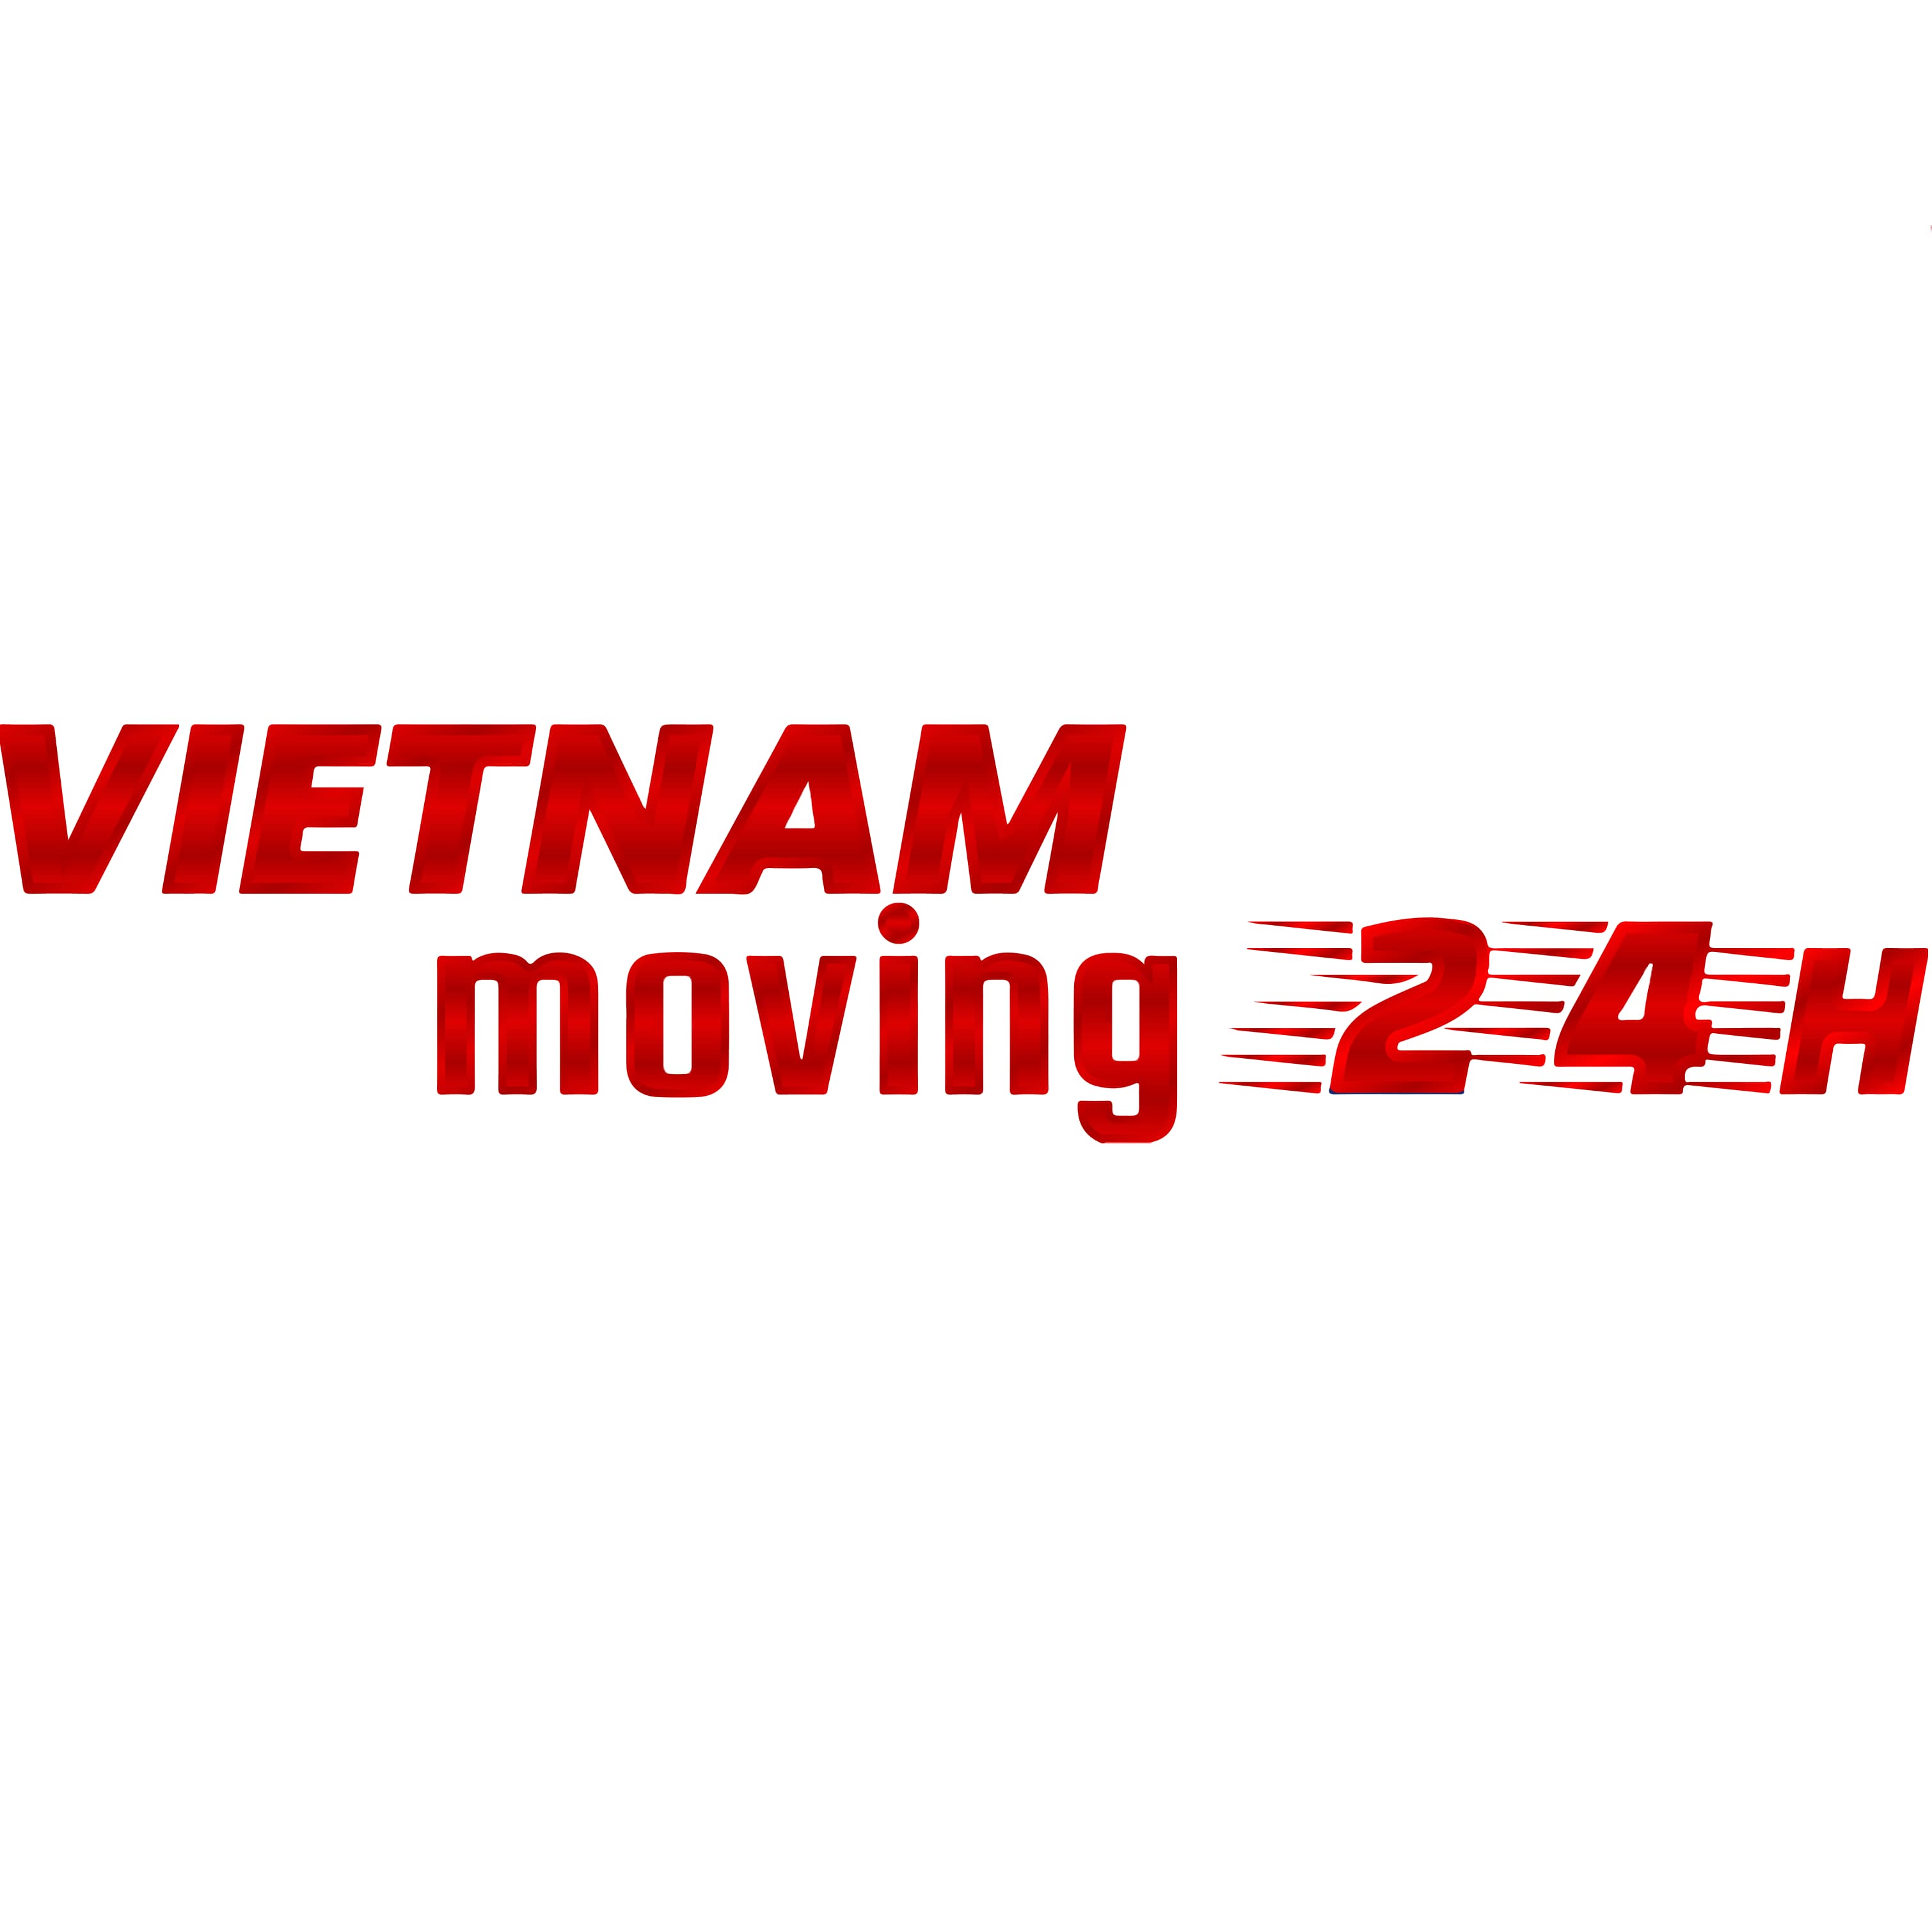 Việt Nam   Moving 24H (vietnammoving24hcom)